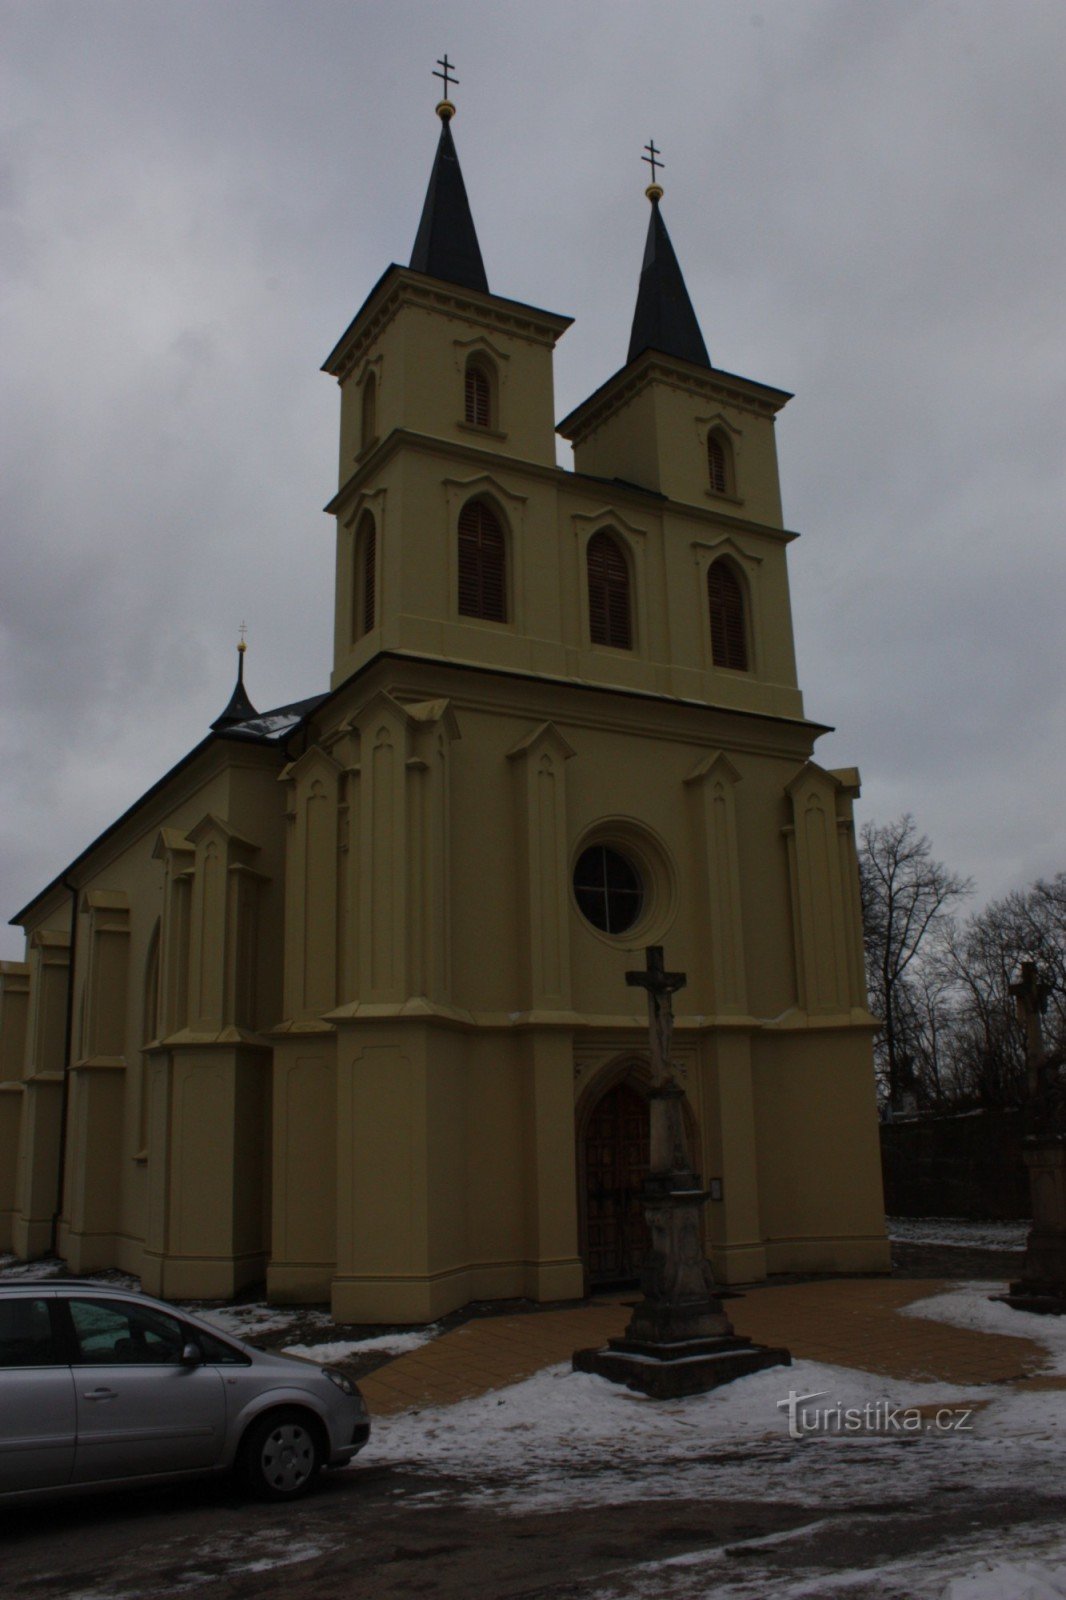 Otaslavice kyrka